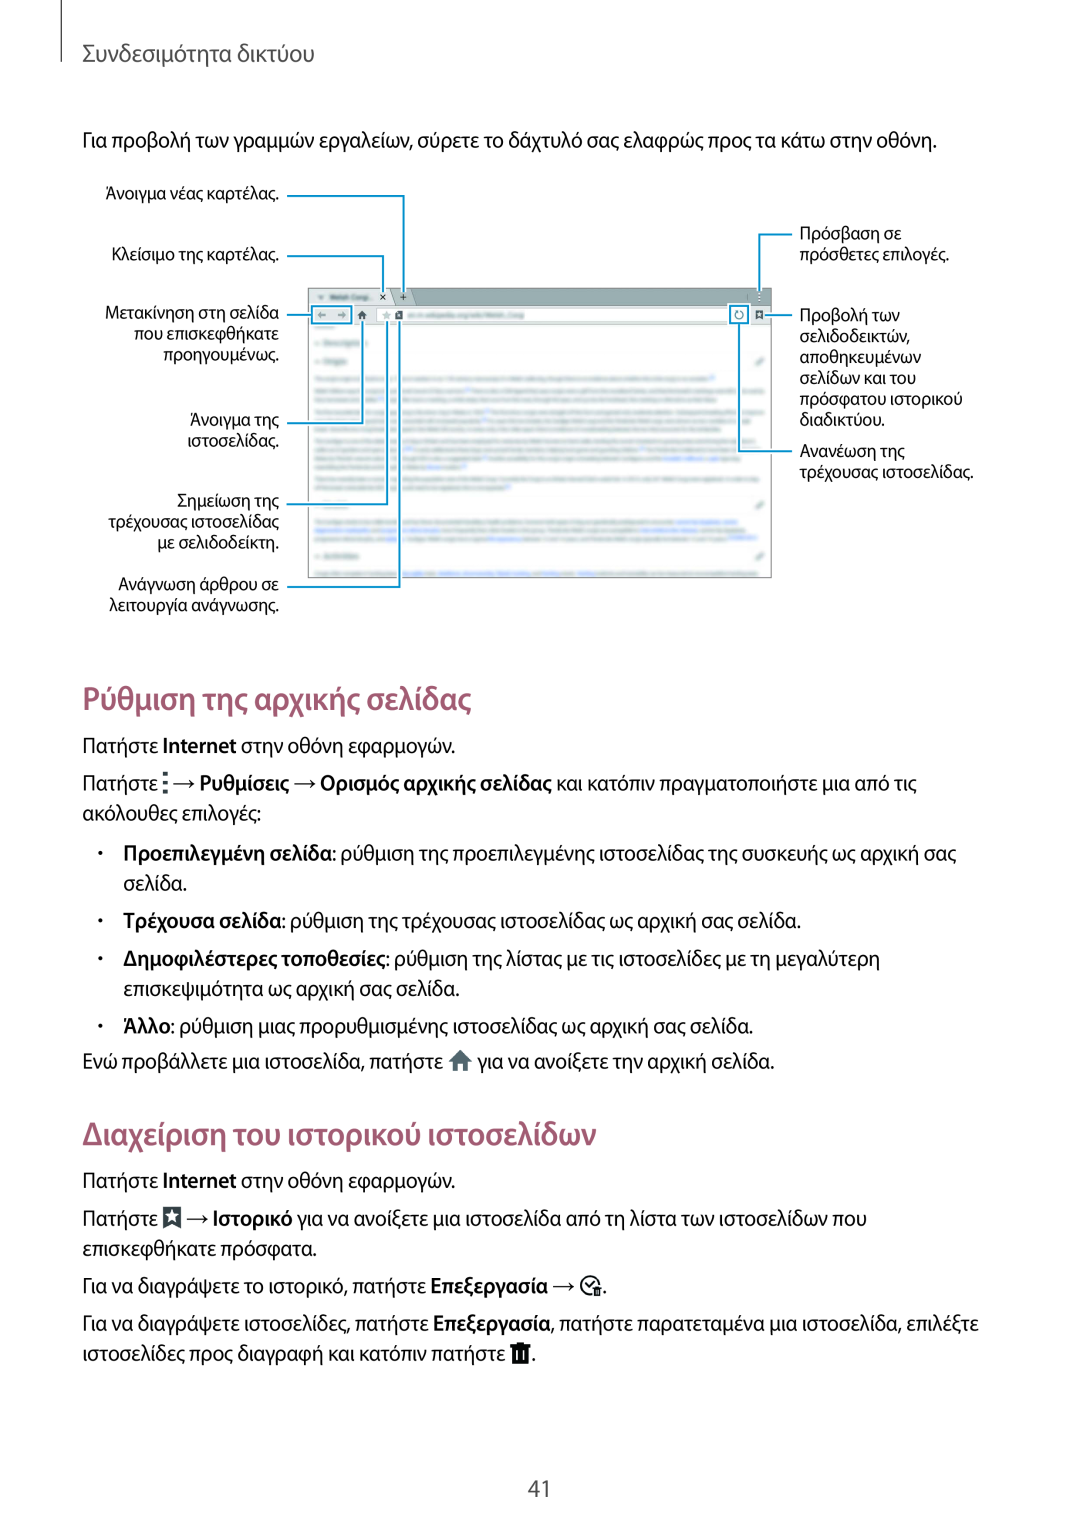 Samsung SM-T805NZWAEUR manual Ρύθμιση της αρχικής σελίδας, Διαχείριση του ιστορικού ιστοσελίδων, Συνδεσιμότητα δικτύου 